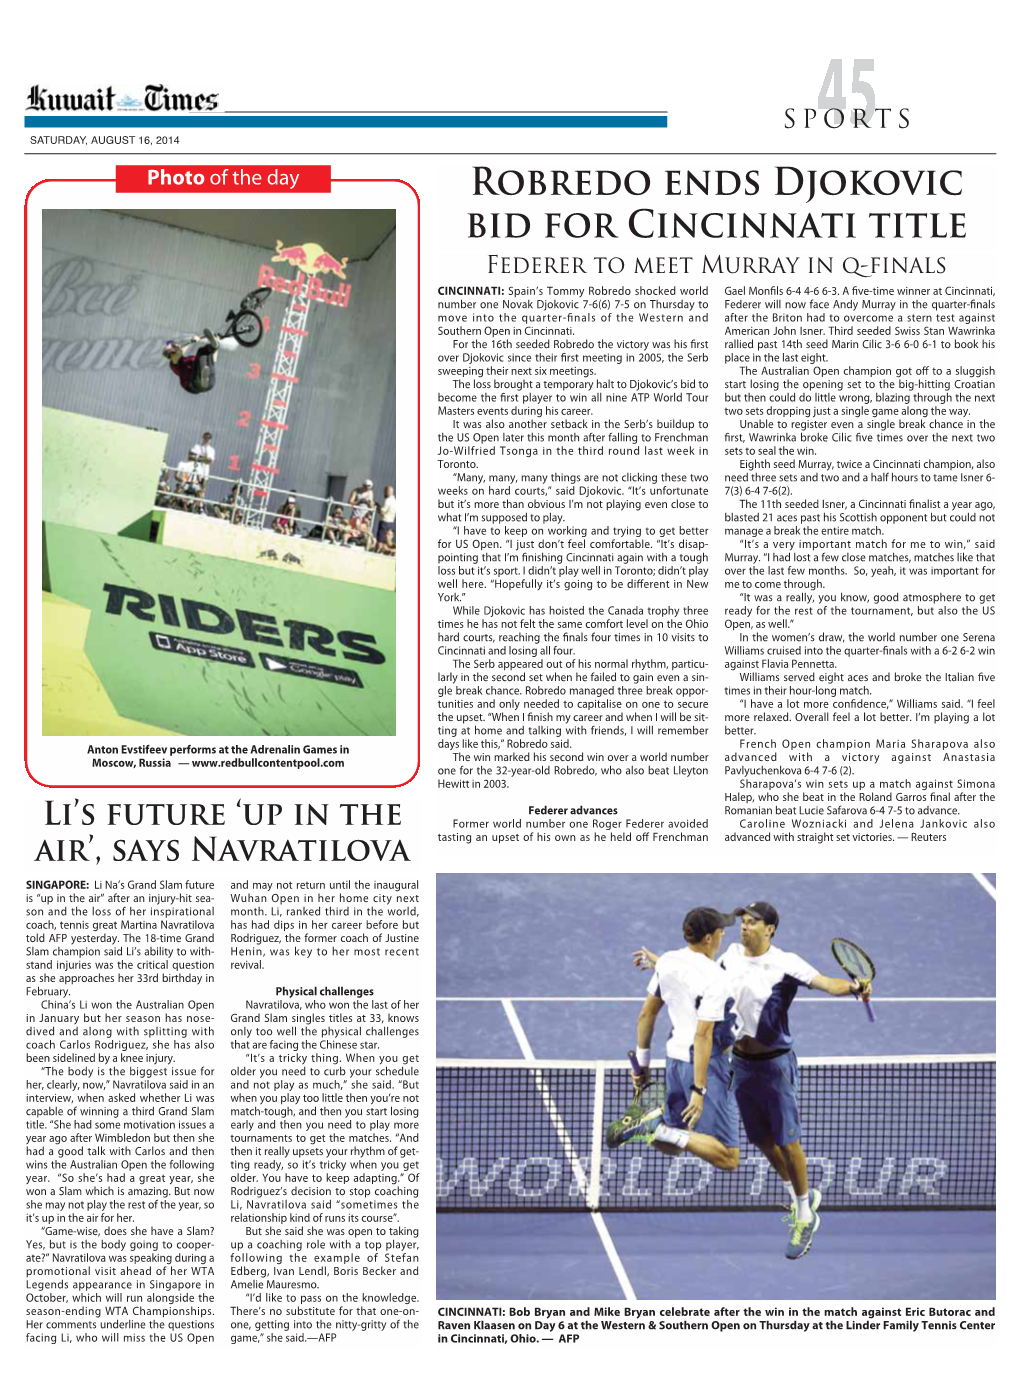 Robredo Ends Djokovic Bid for Cincinnati Title Federer to Meet Murray in Q-Finals